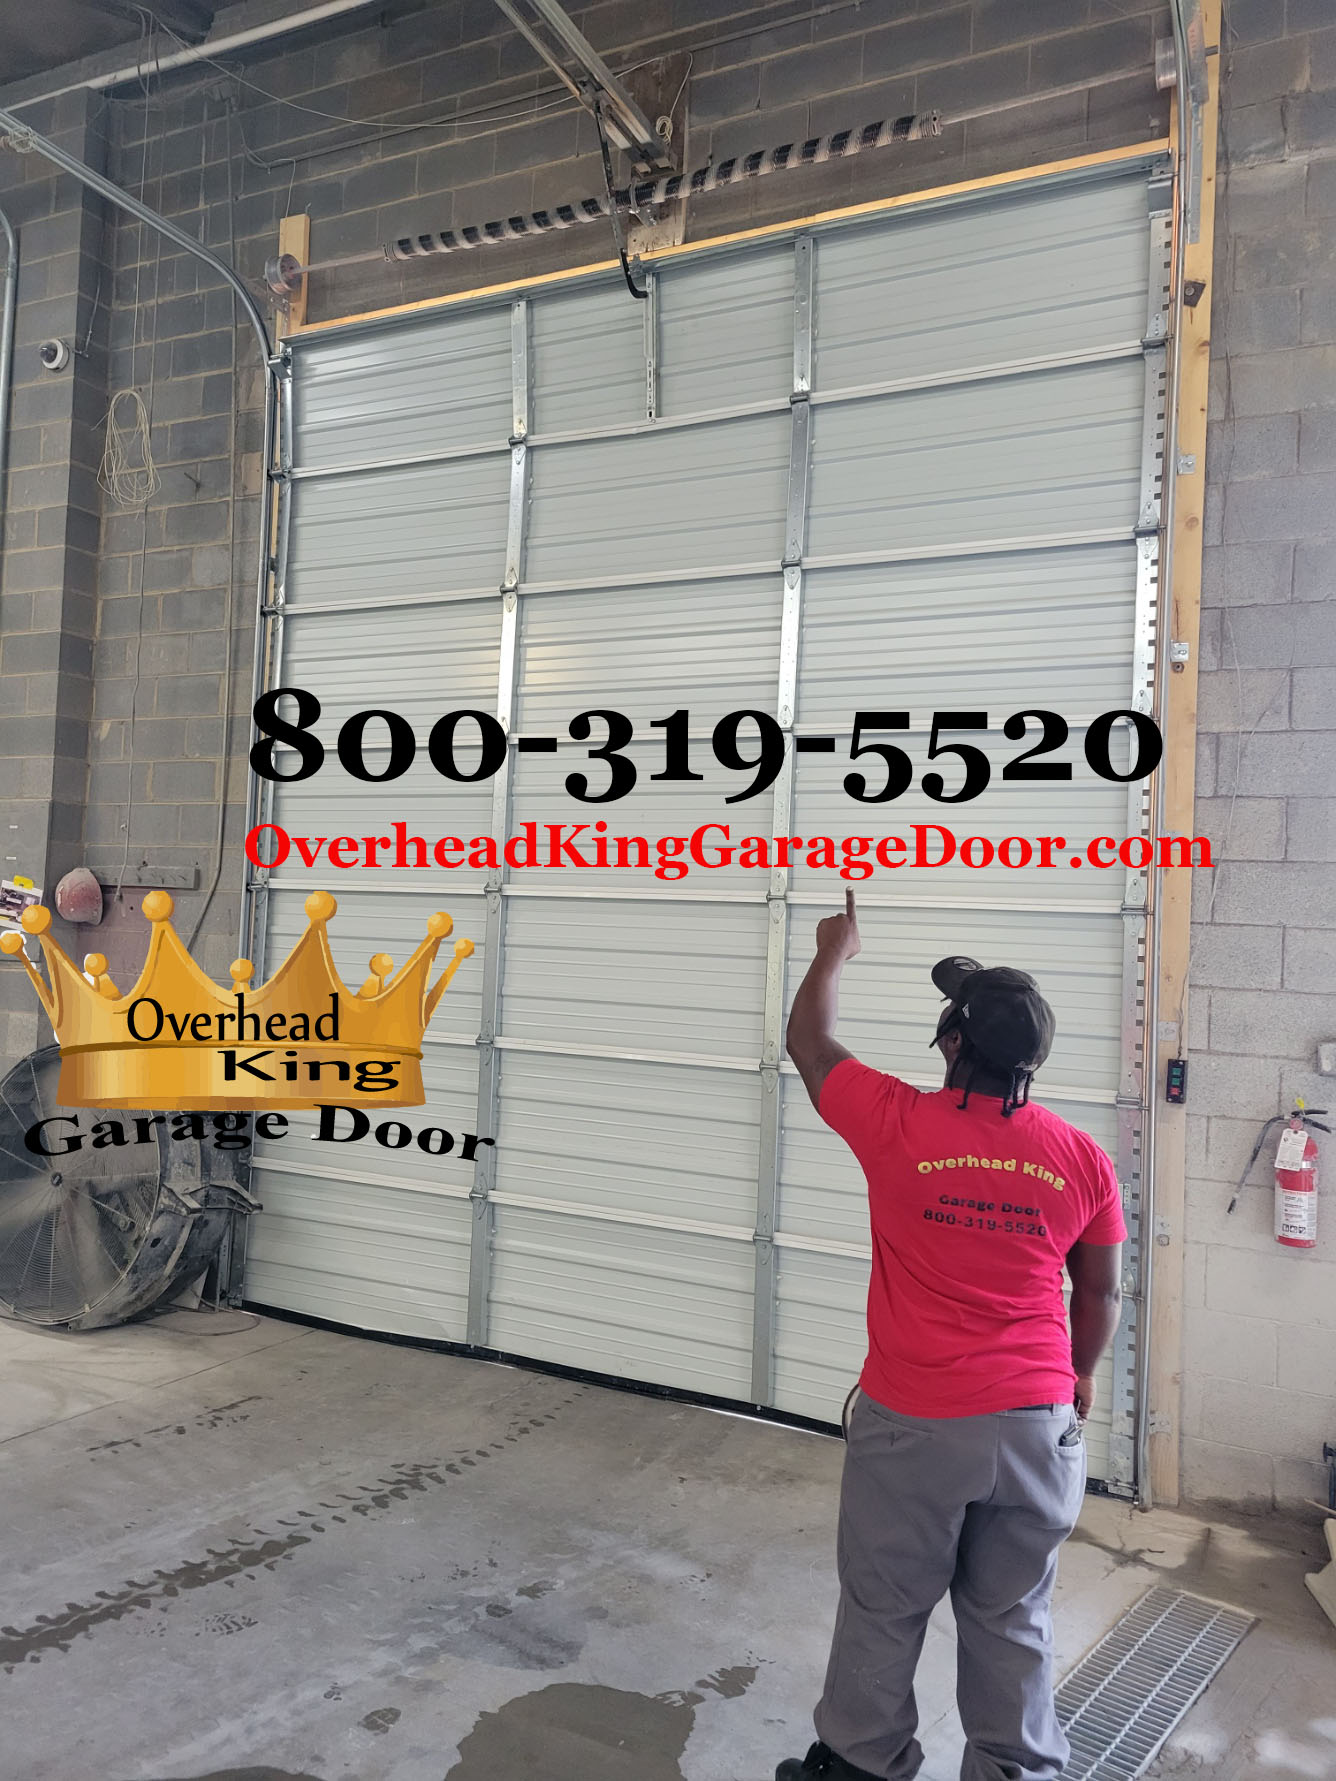 Kings Mountain Garage Door Repair